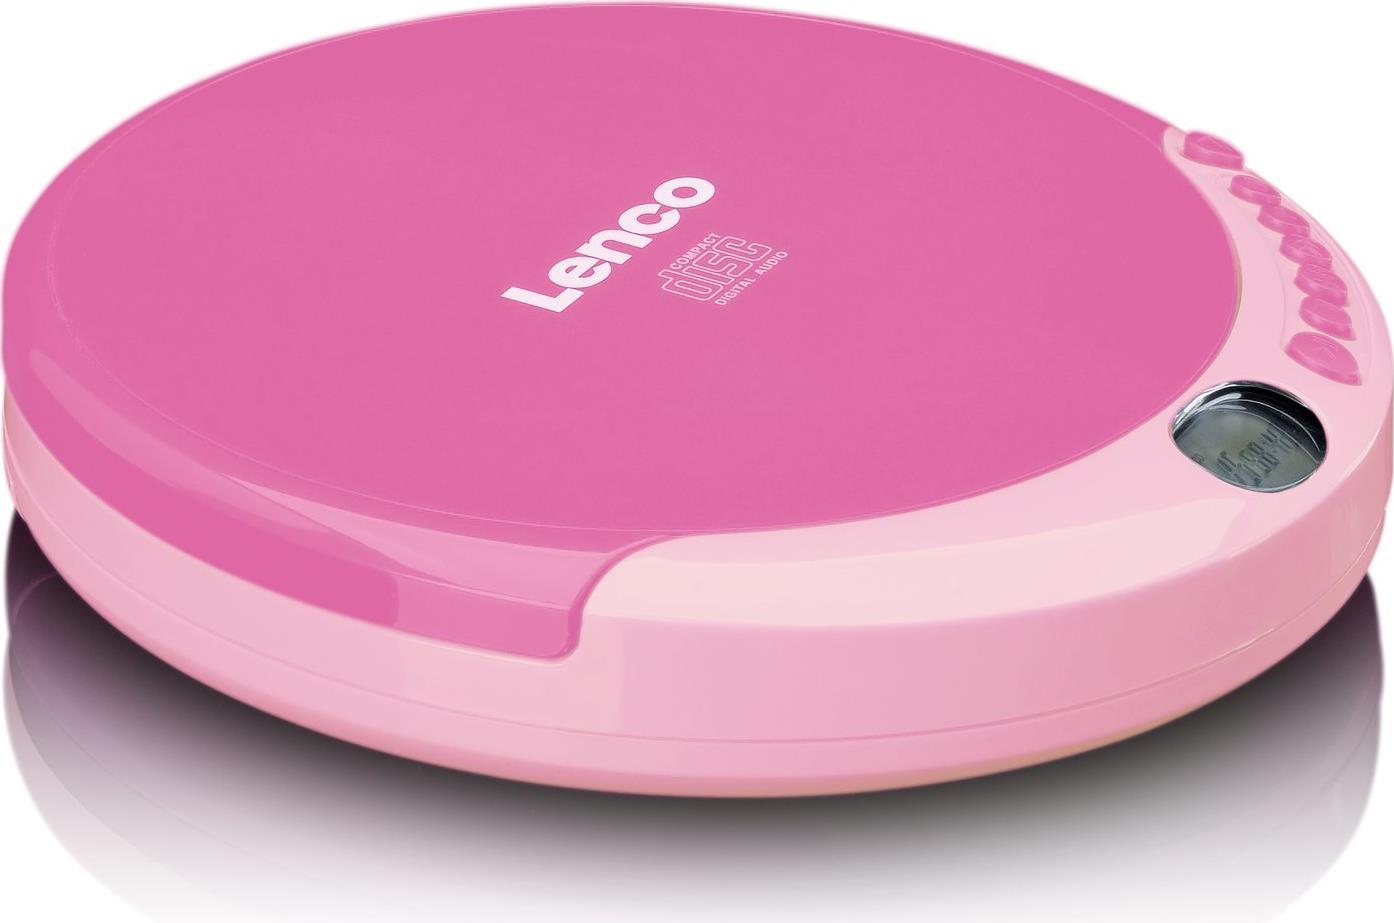 CD-011PINK Pink CD-Player Tragbarer Lenco CD-011